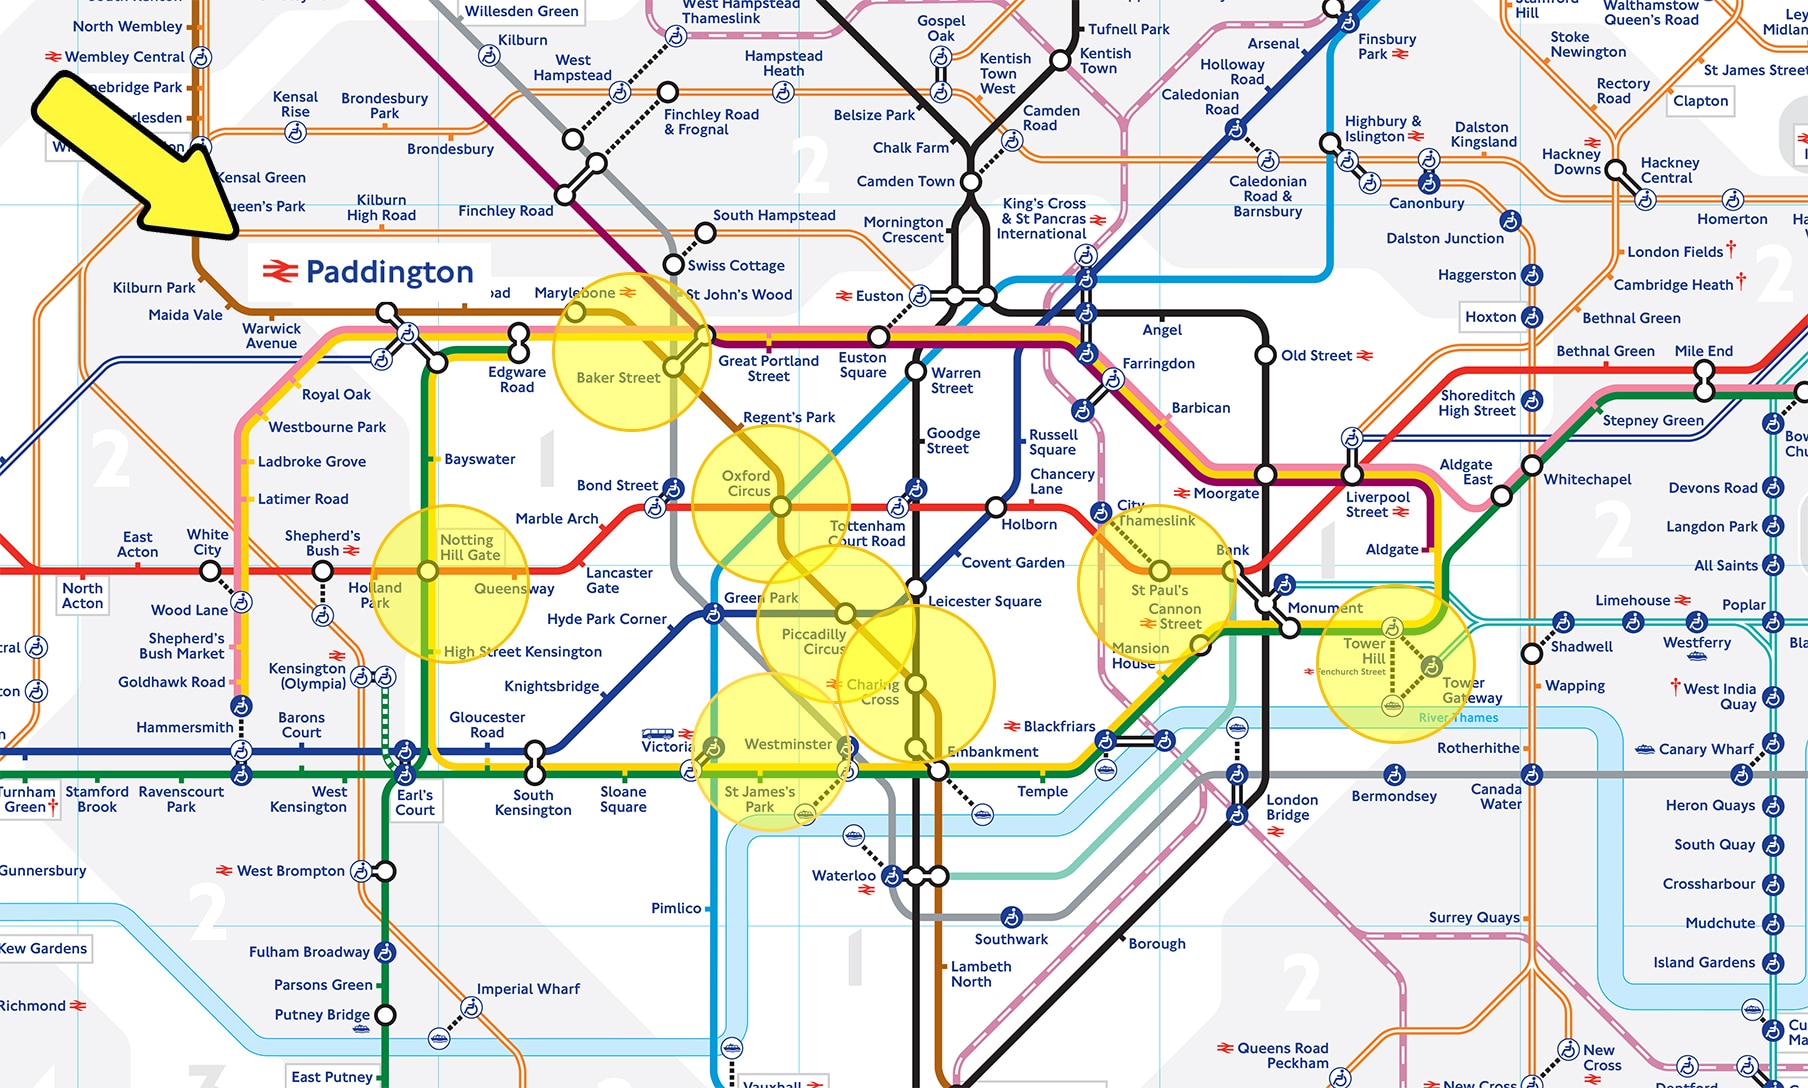 Large Print Tube Map 1 2 